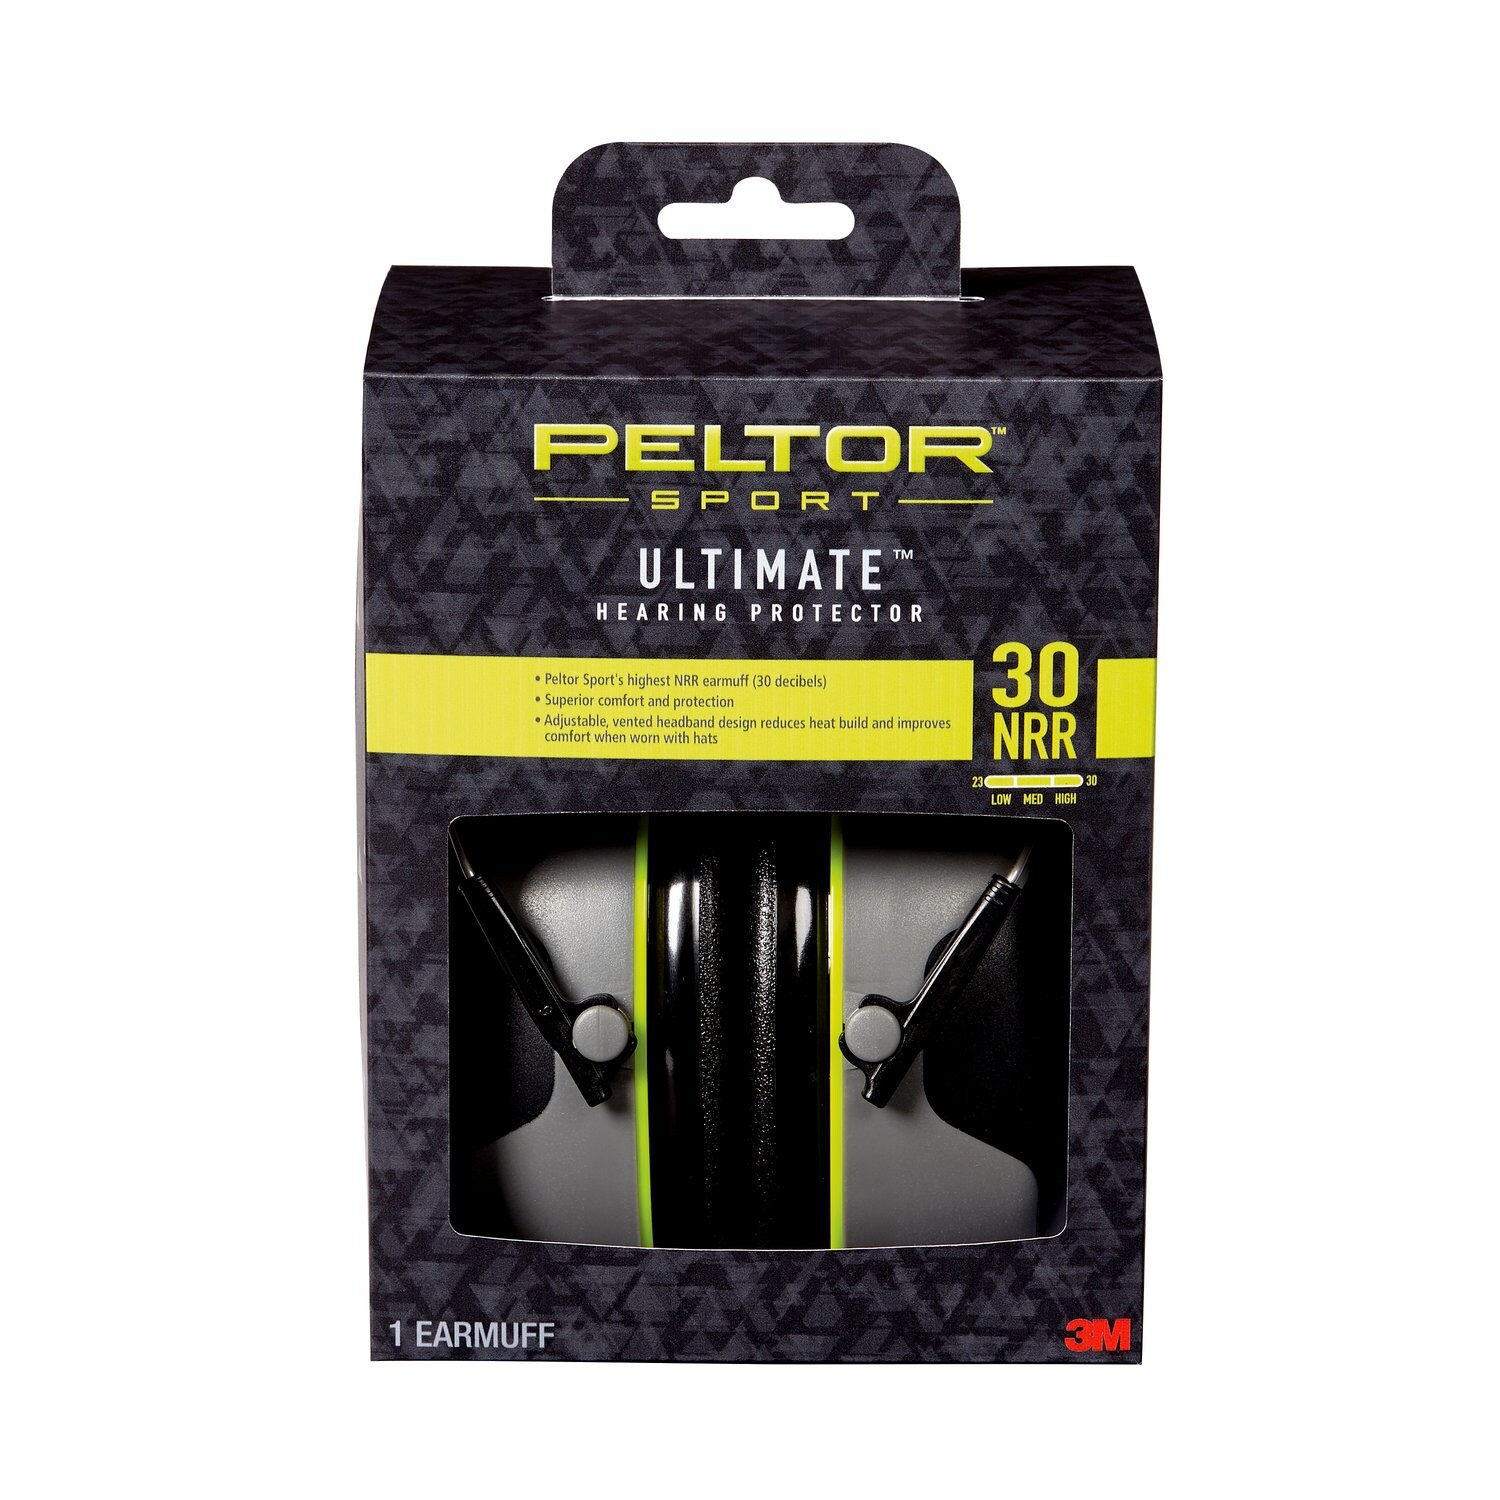 7100088576 - Peltor Sport Ultimate Hearing Protector, 97042-PEL-6C, 30 NRR Black/Gray